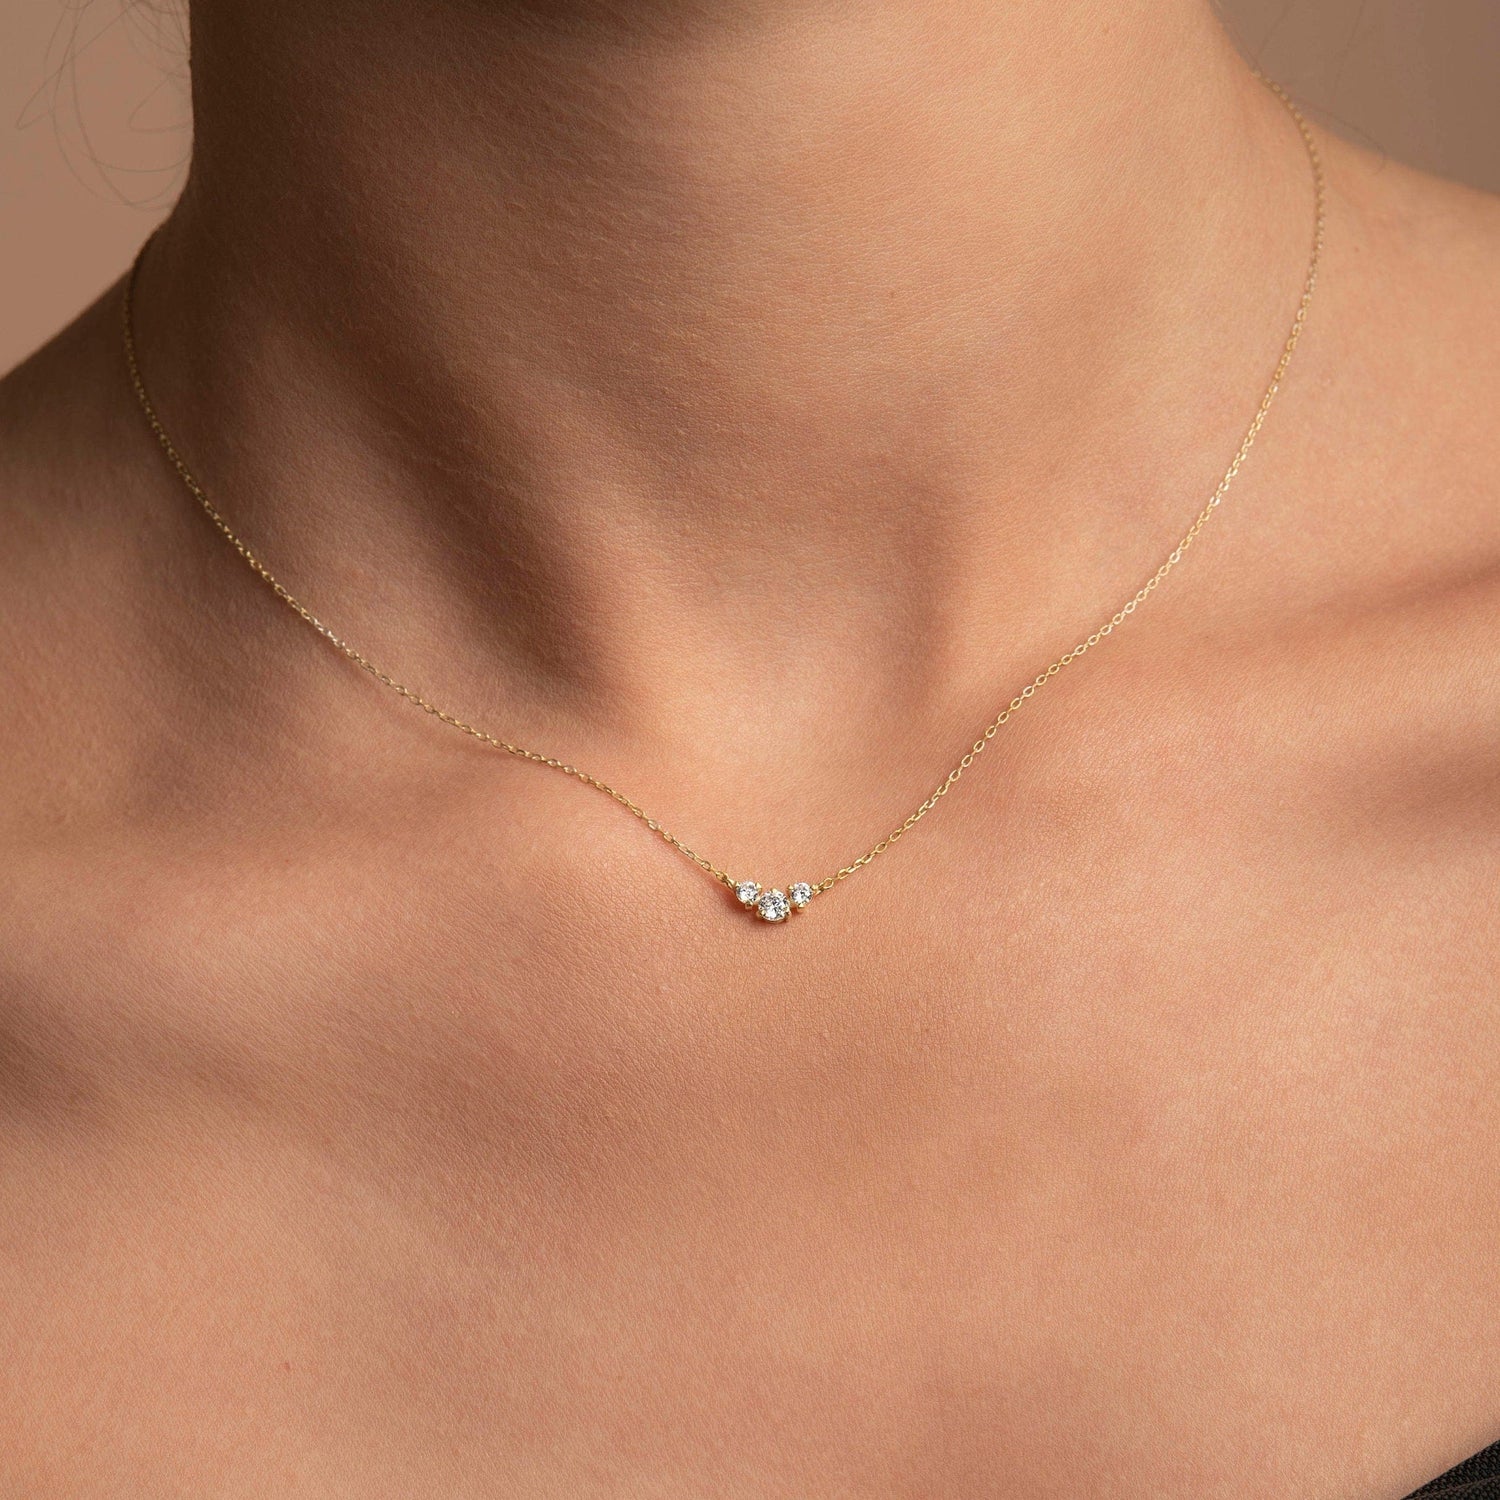 Three Diamond Necklace \ 14k Gold Trio Diamond Necklace 0.16ct \ Dainty Diamond Necklace \ Delicate Necklace for Women \ Christmas Sale